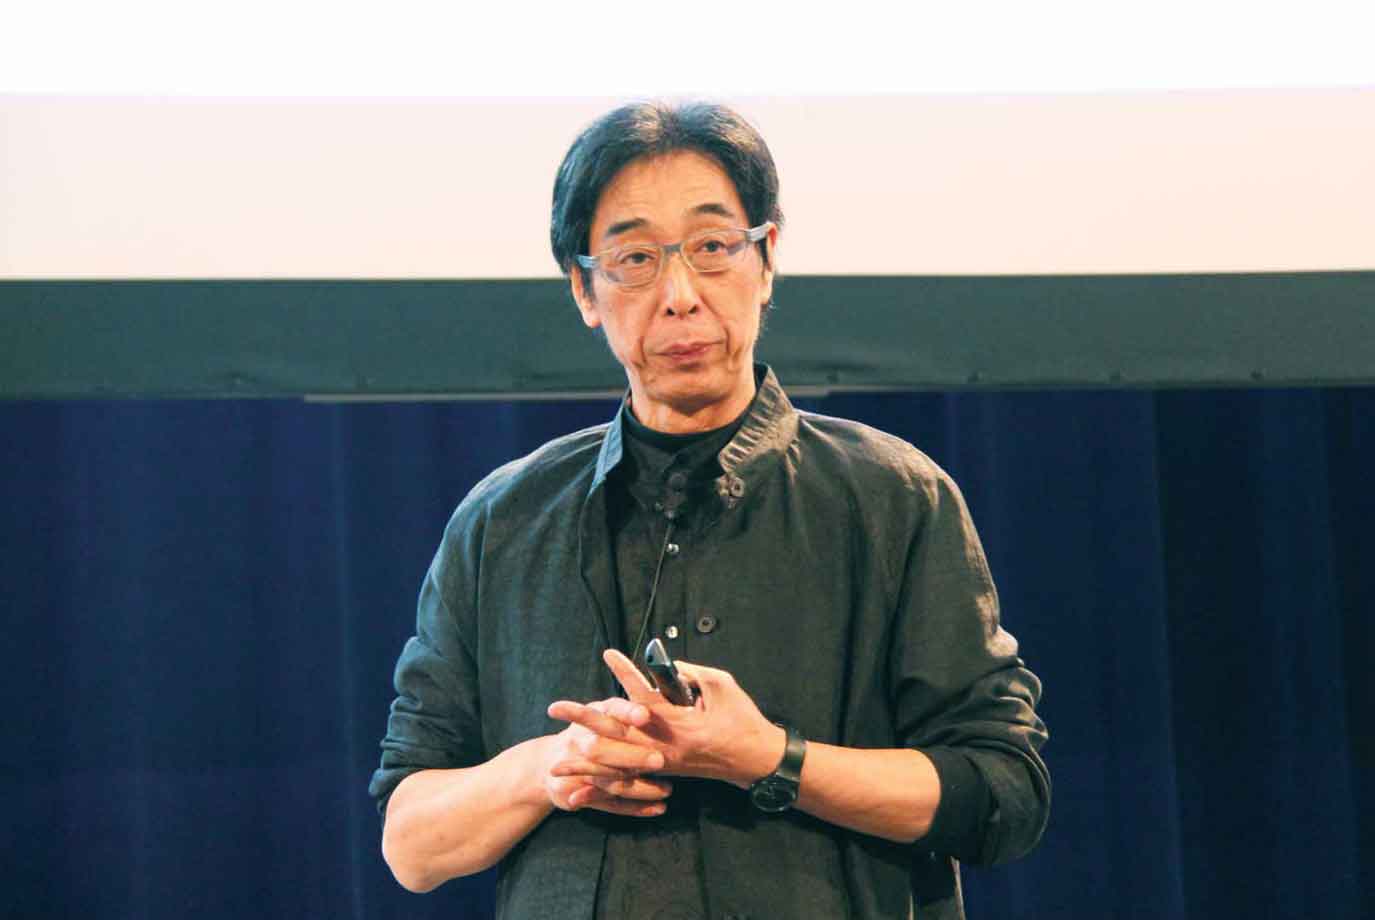 The Philosophy and Design of MUJI” talk event with Masaaki Kanai